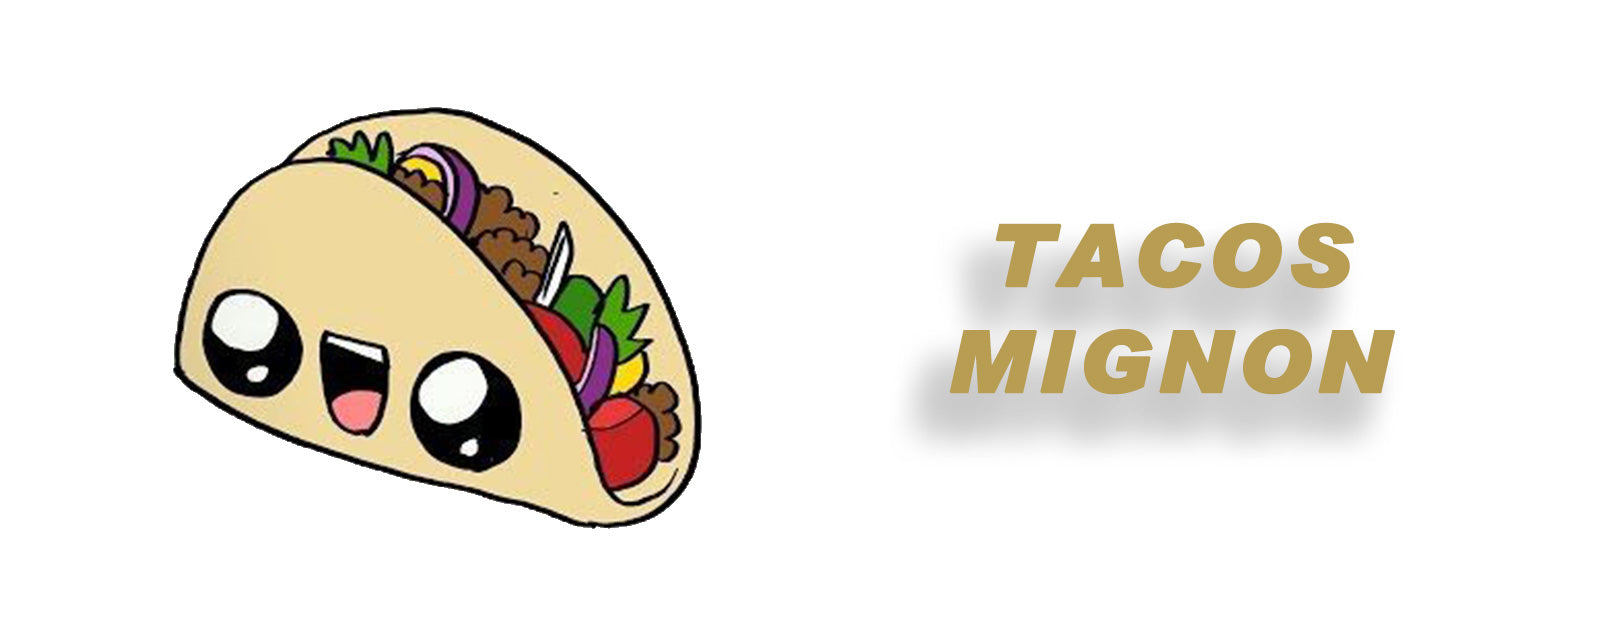 dessin kawaii nourriture mexicaine